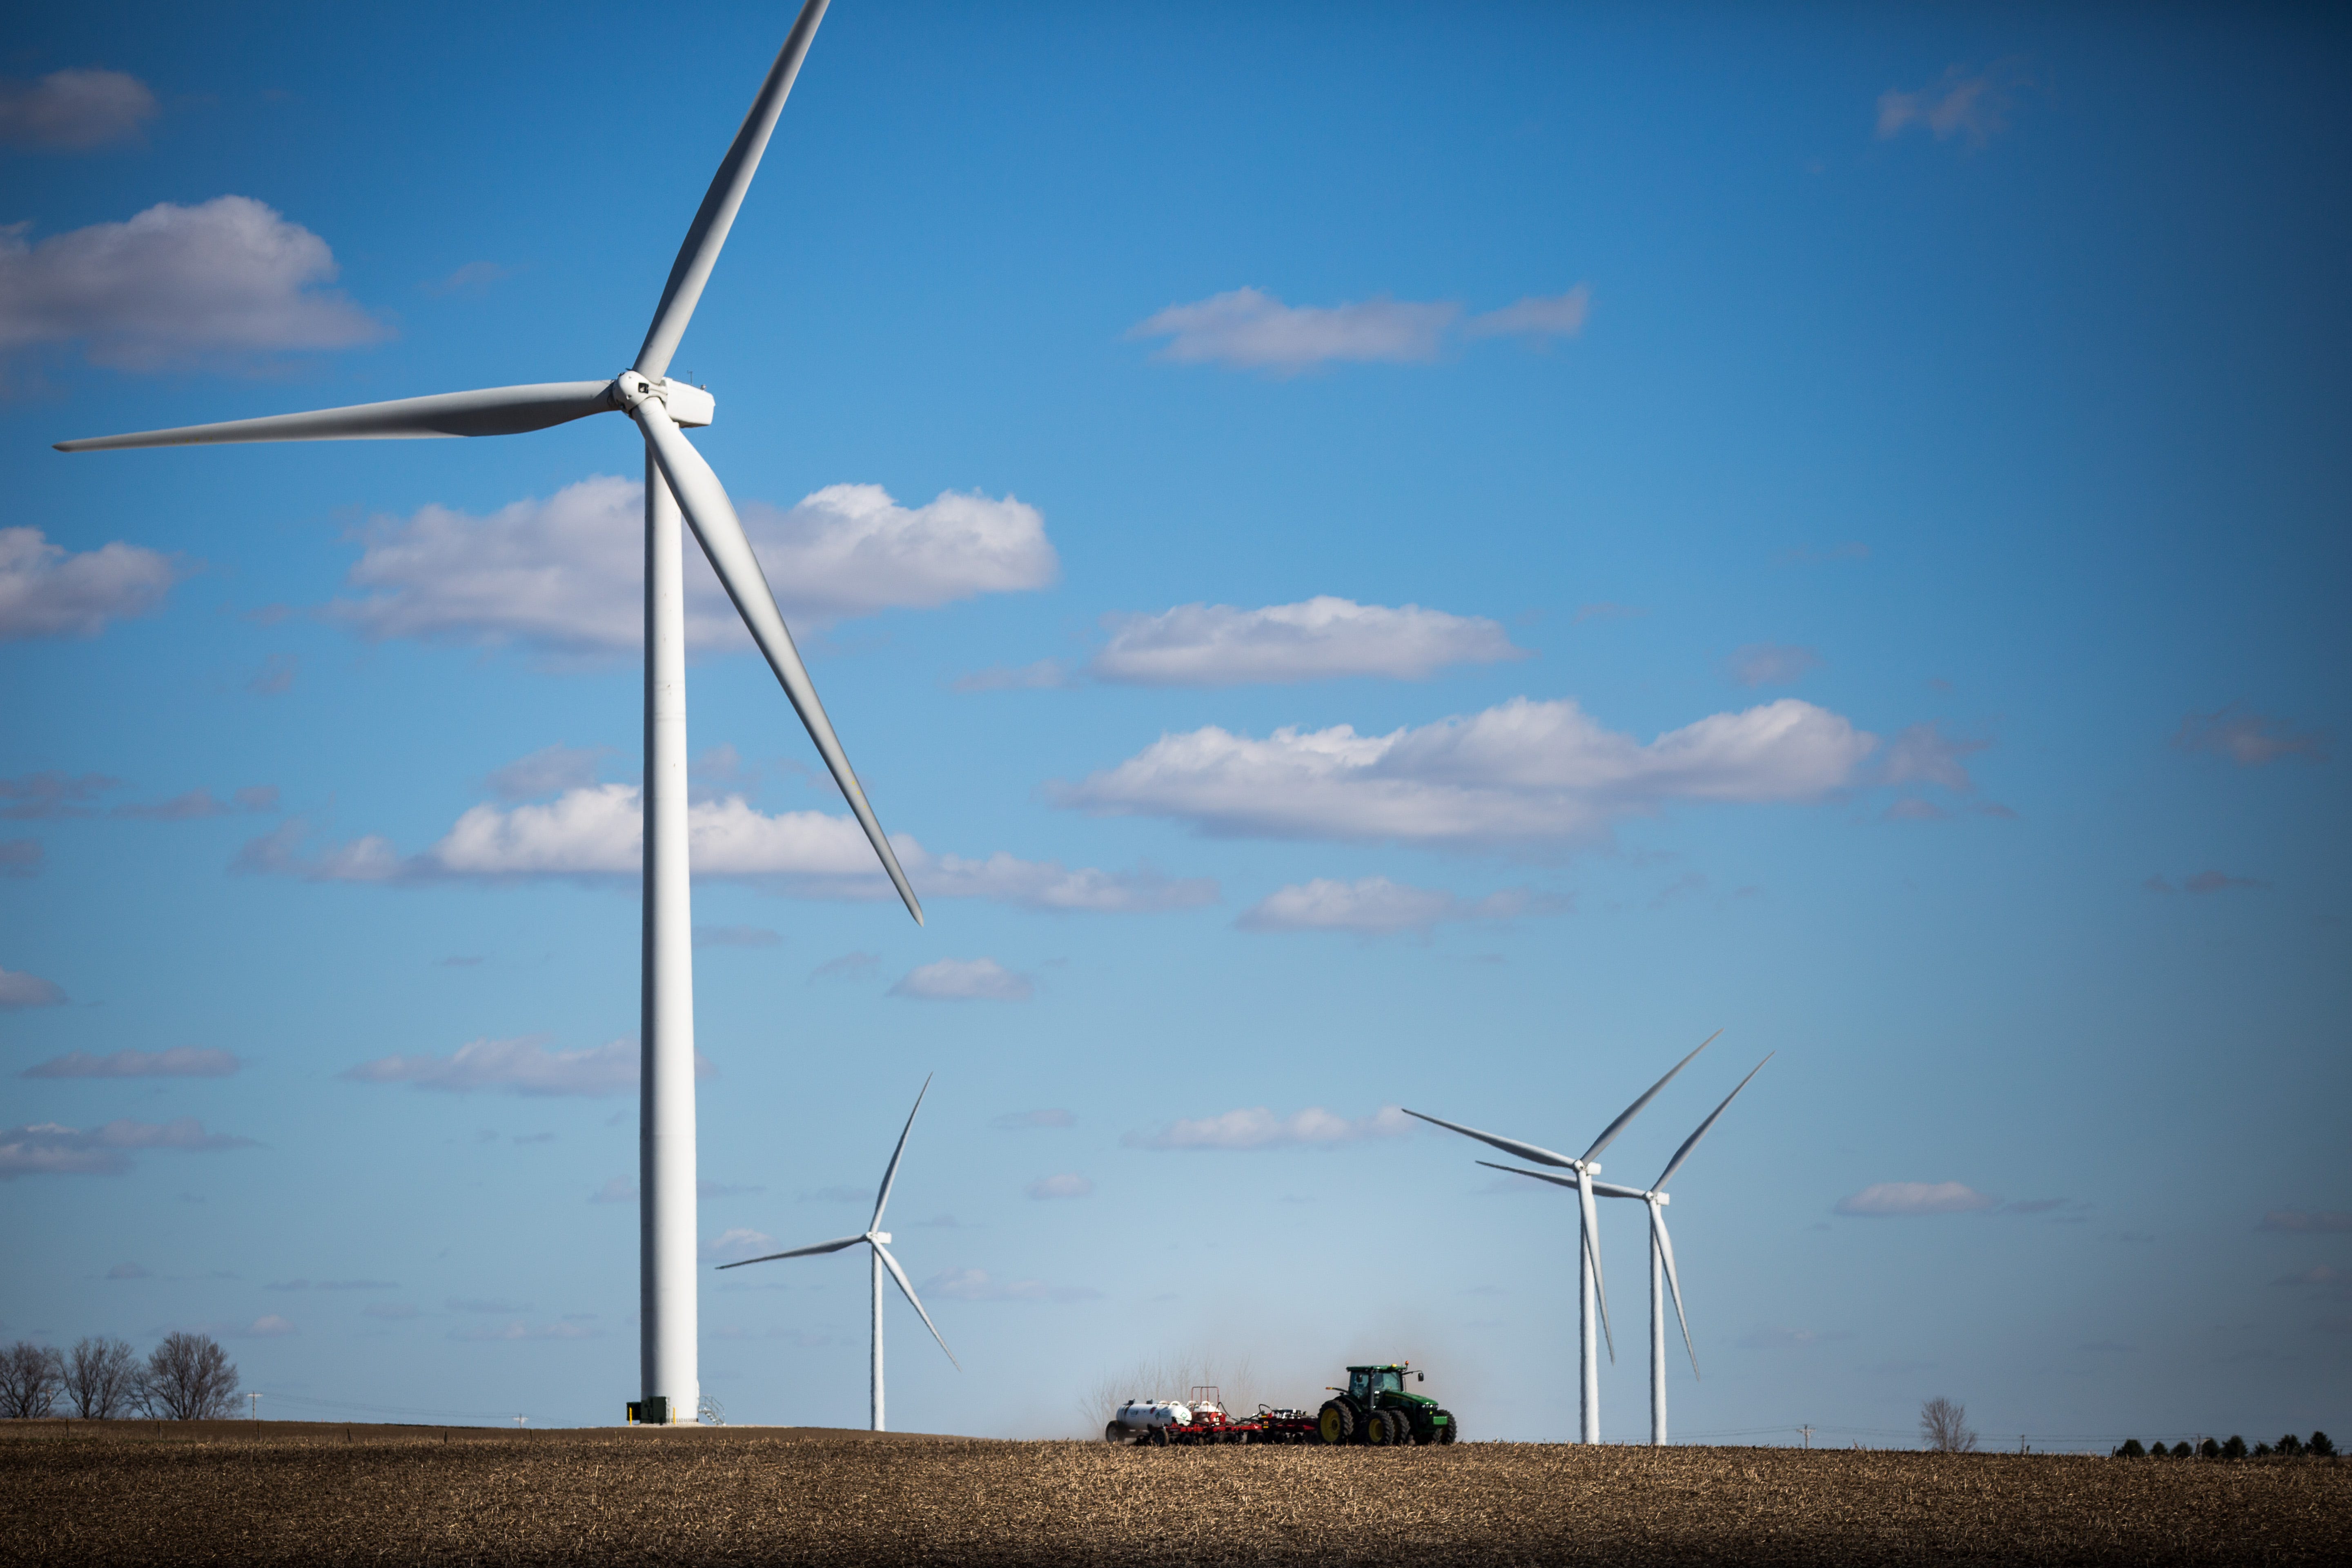 Is wind power saving rural Iowa or wrecking it?